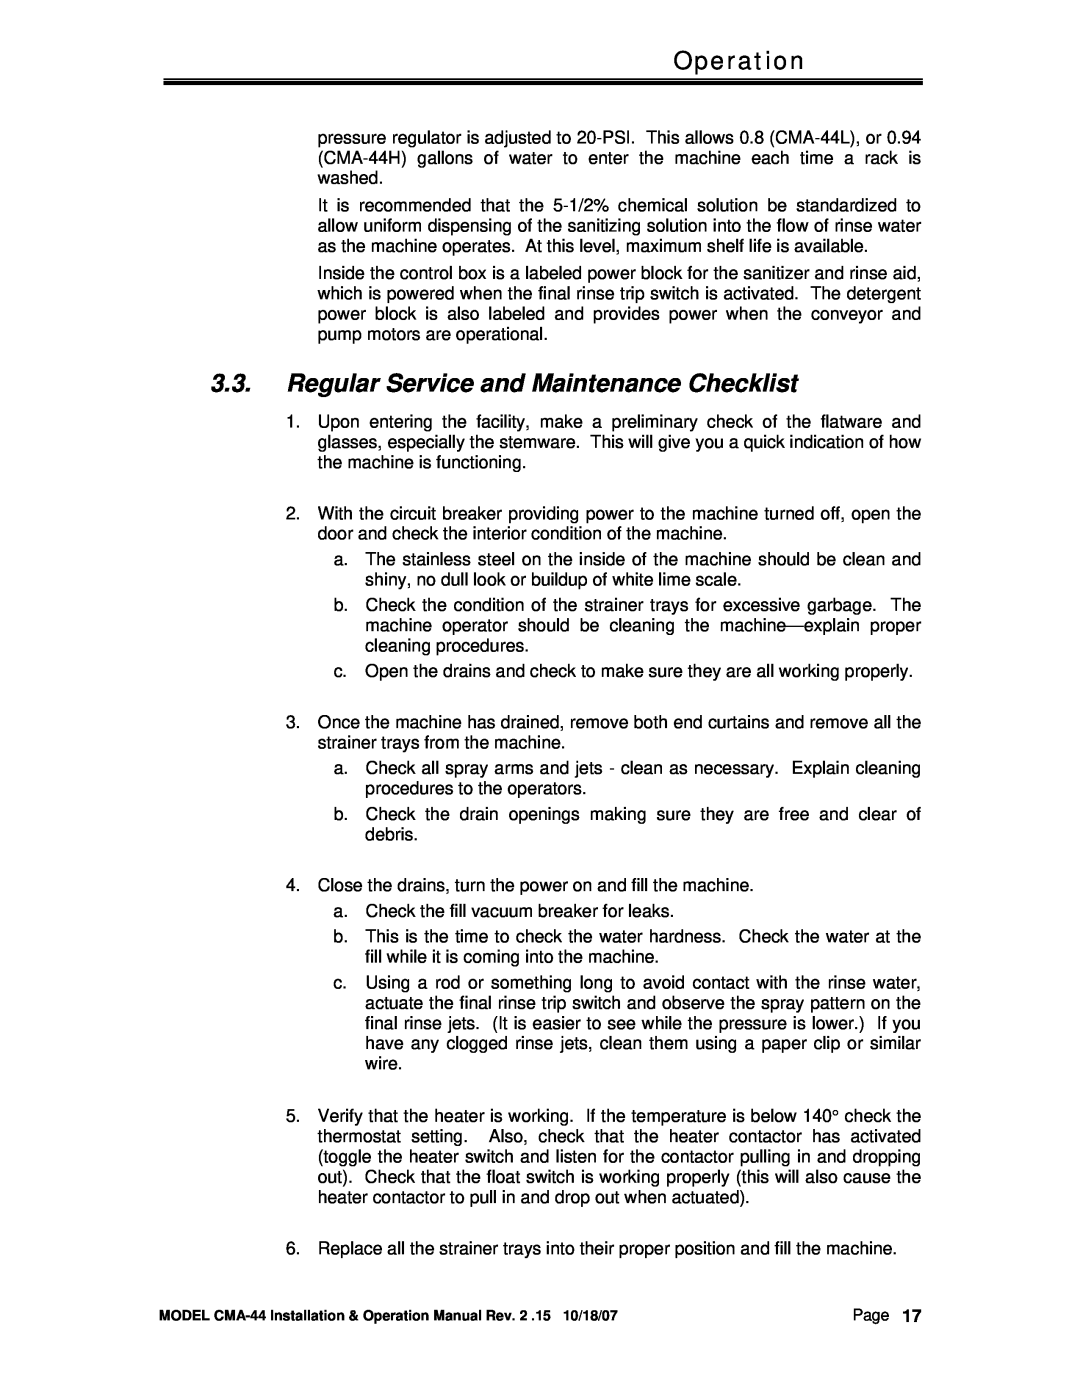 CMA Dishmachines CMA-44 manual Regular Service and Maintenance Checklist, Operation 